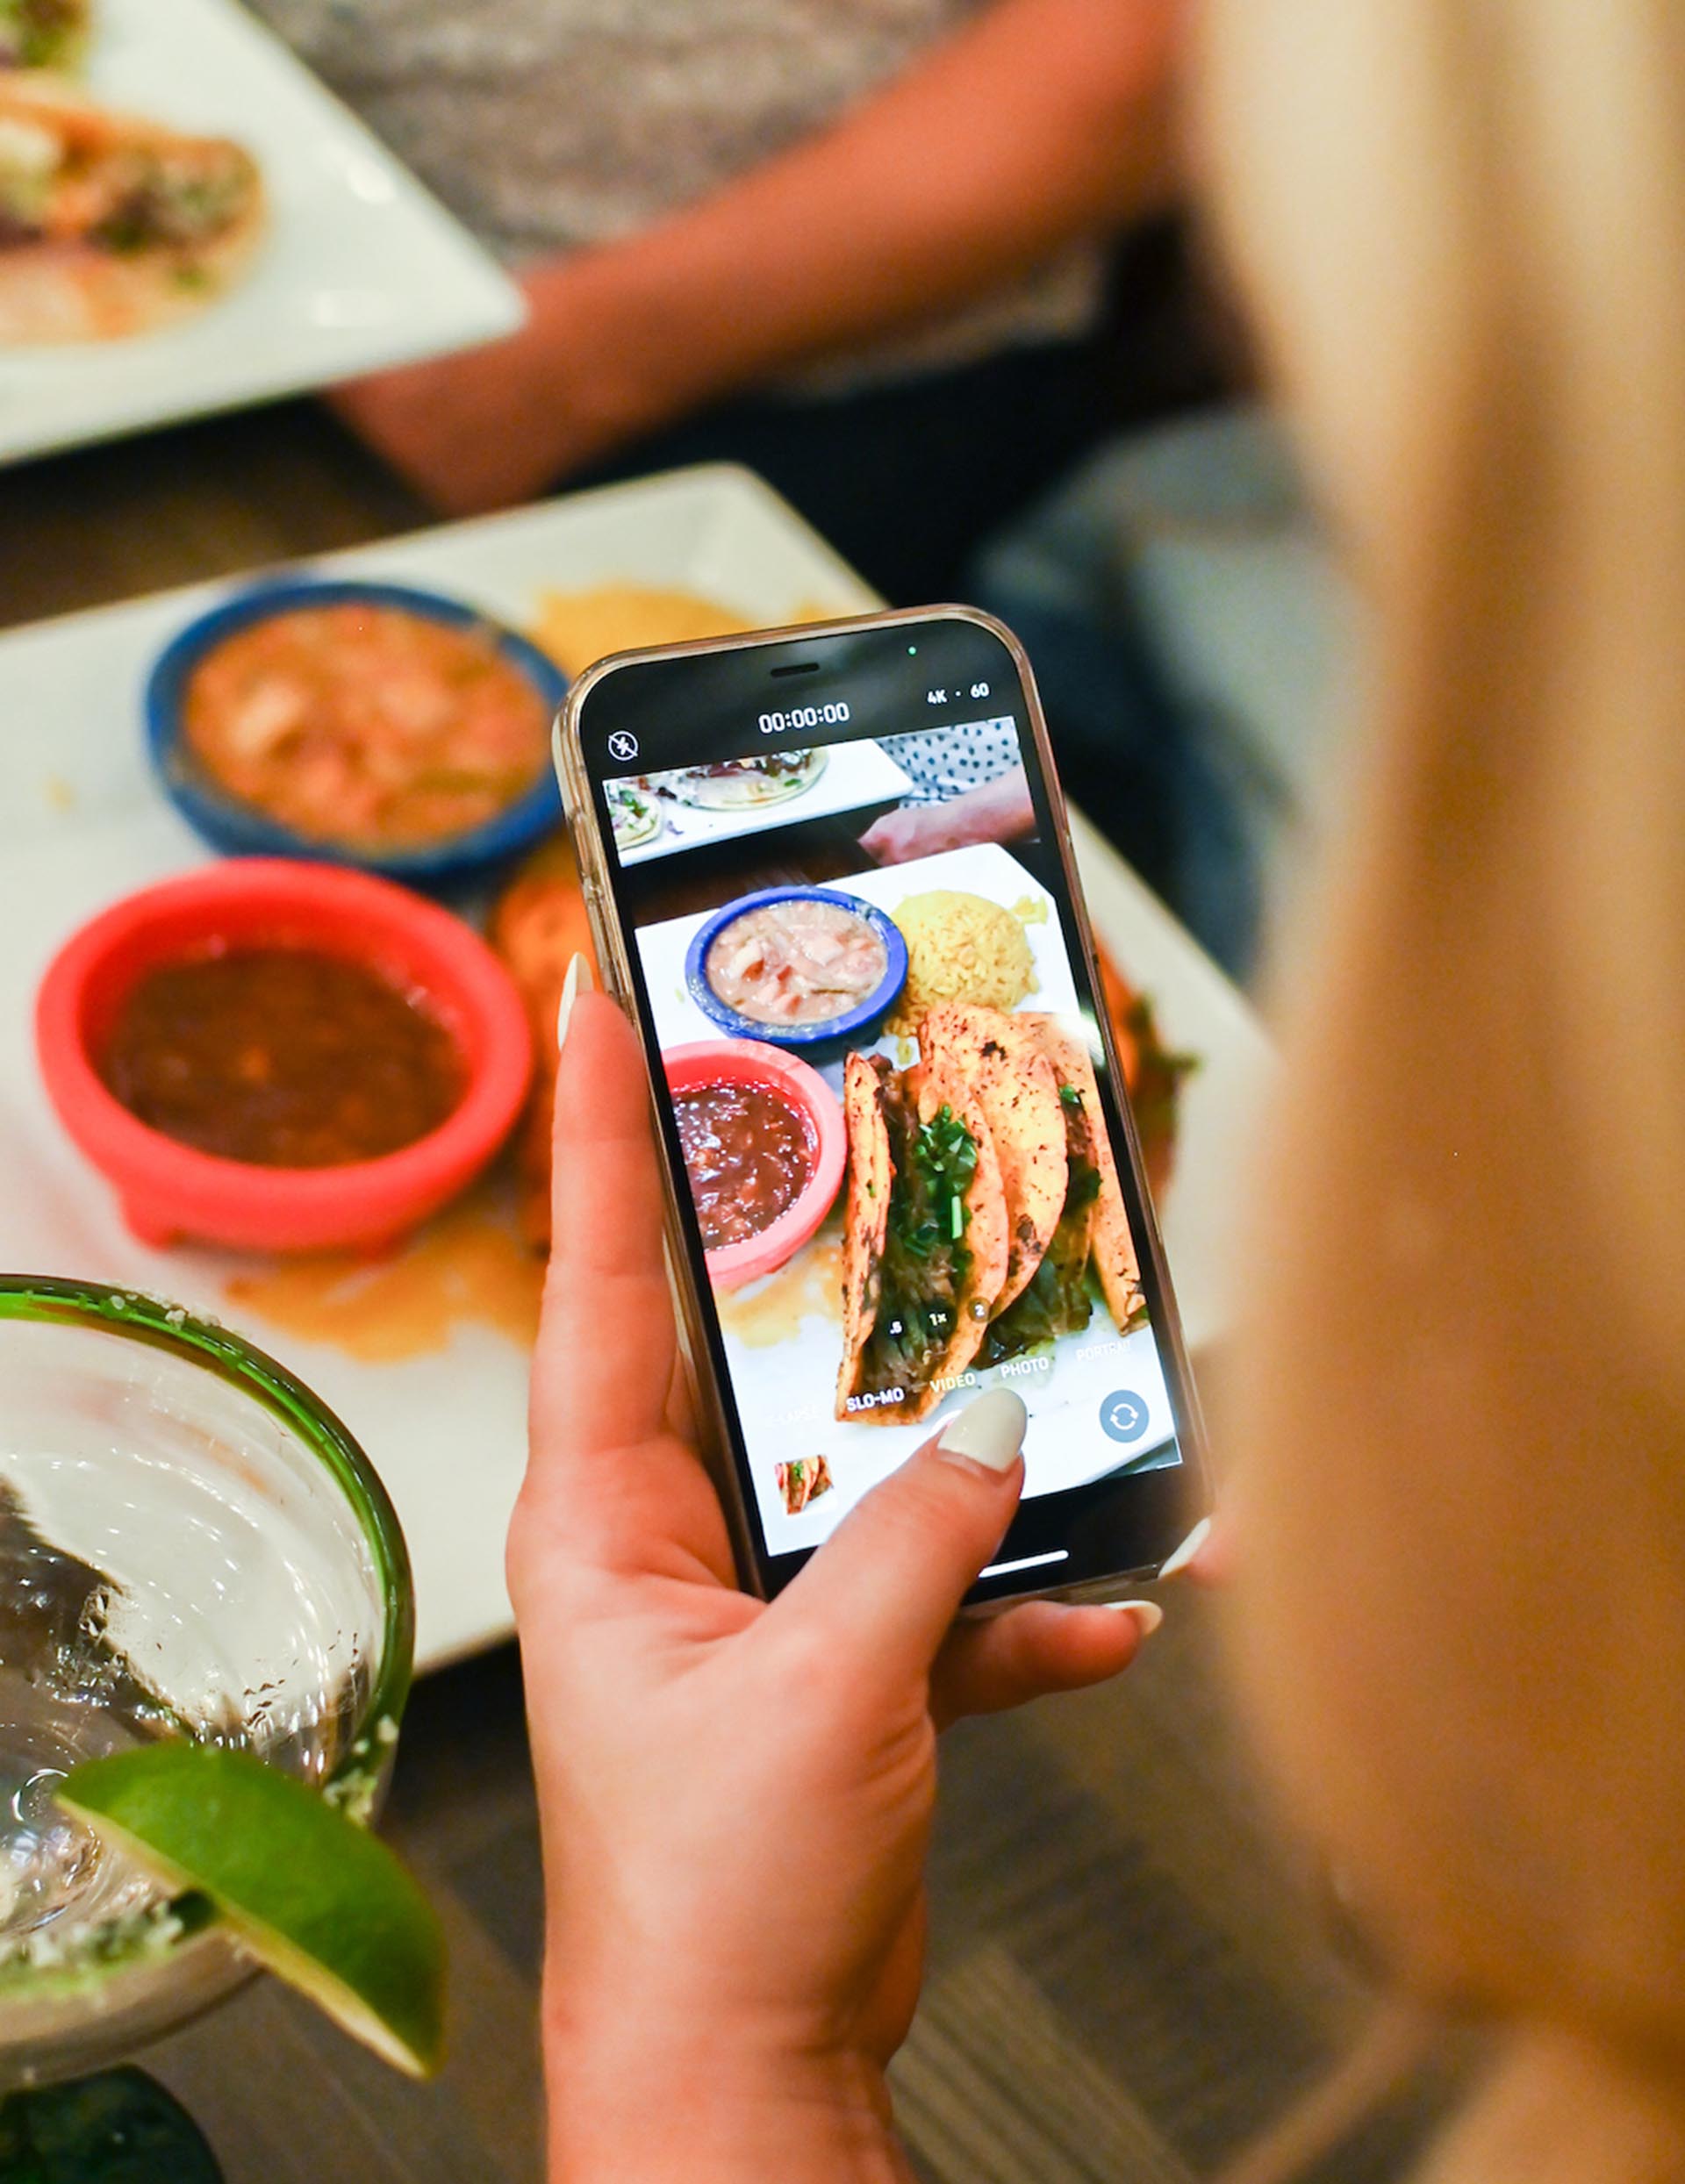 Tampa Bay’s latest food craze? Quesabirria tacos